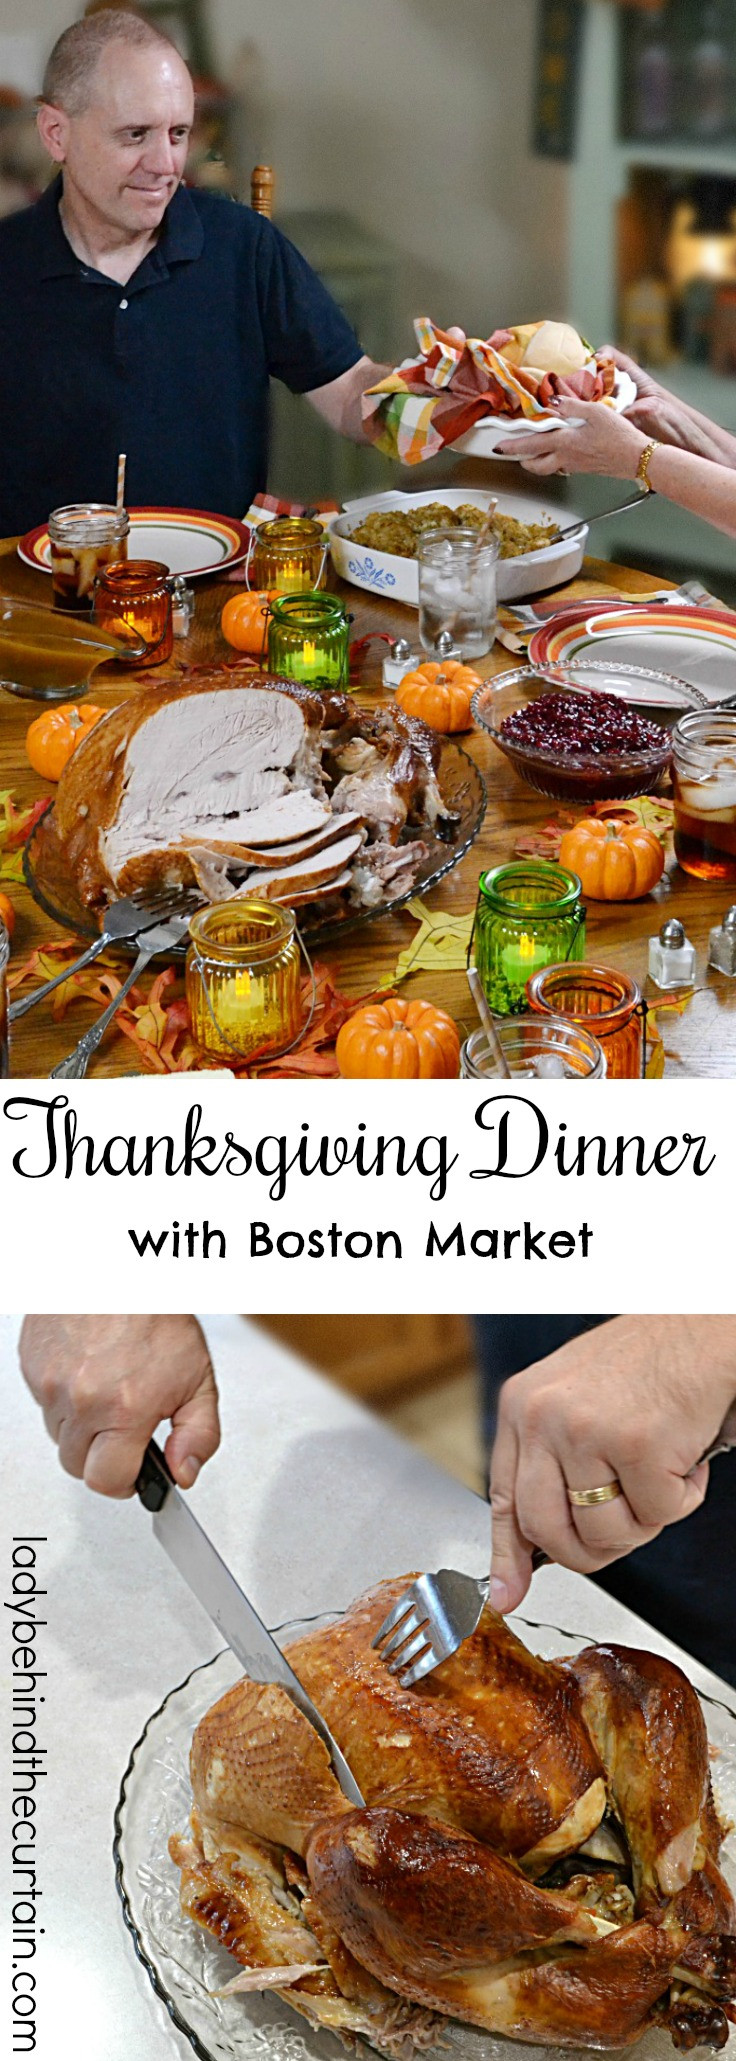 Boston Market Turkey Thanksgiving
 Thanksgiving Dinner with Boston Market